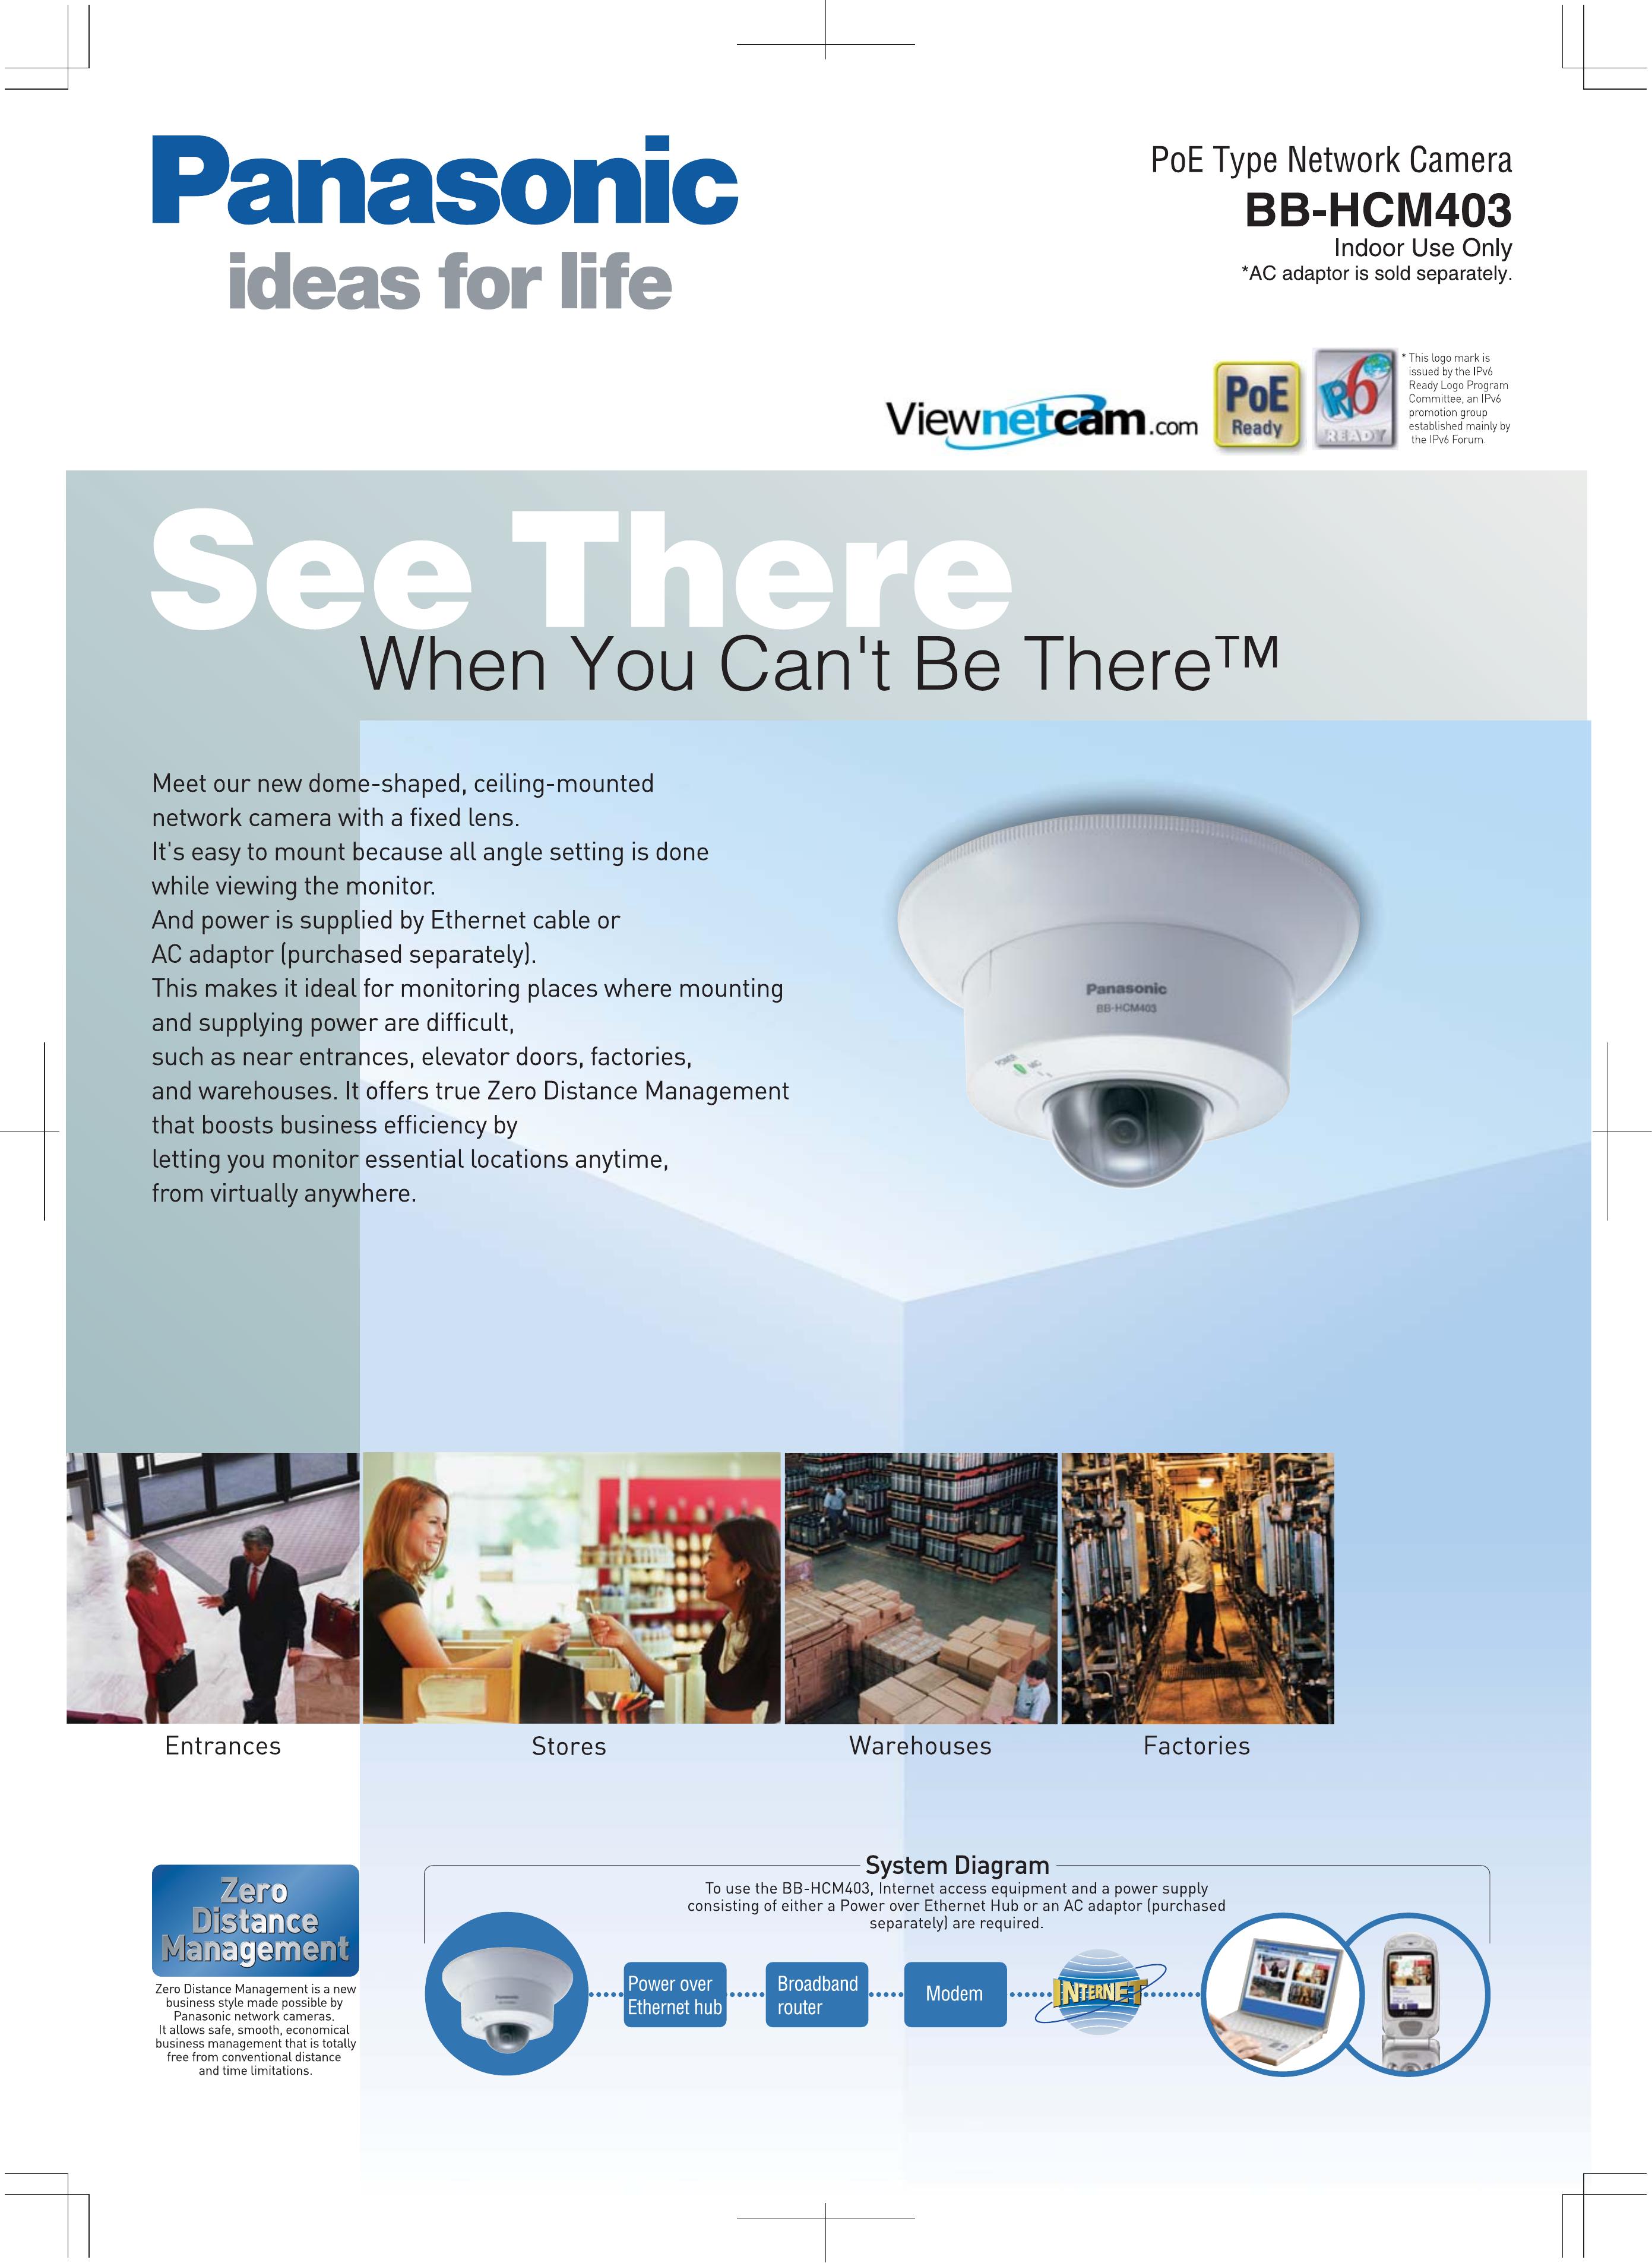 Panasonic BB-HCM403 Security Camera User Manual